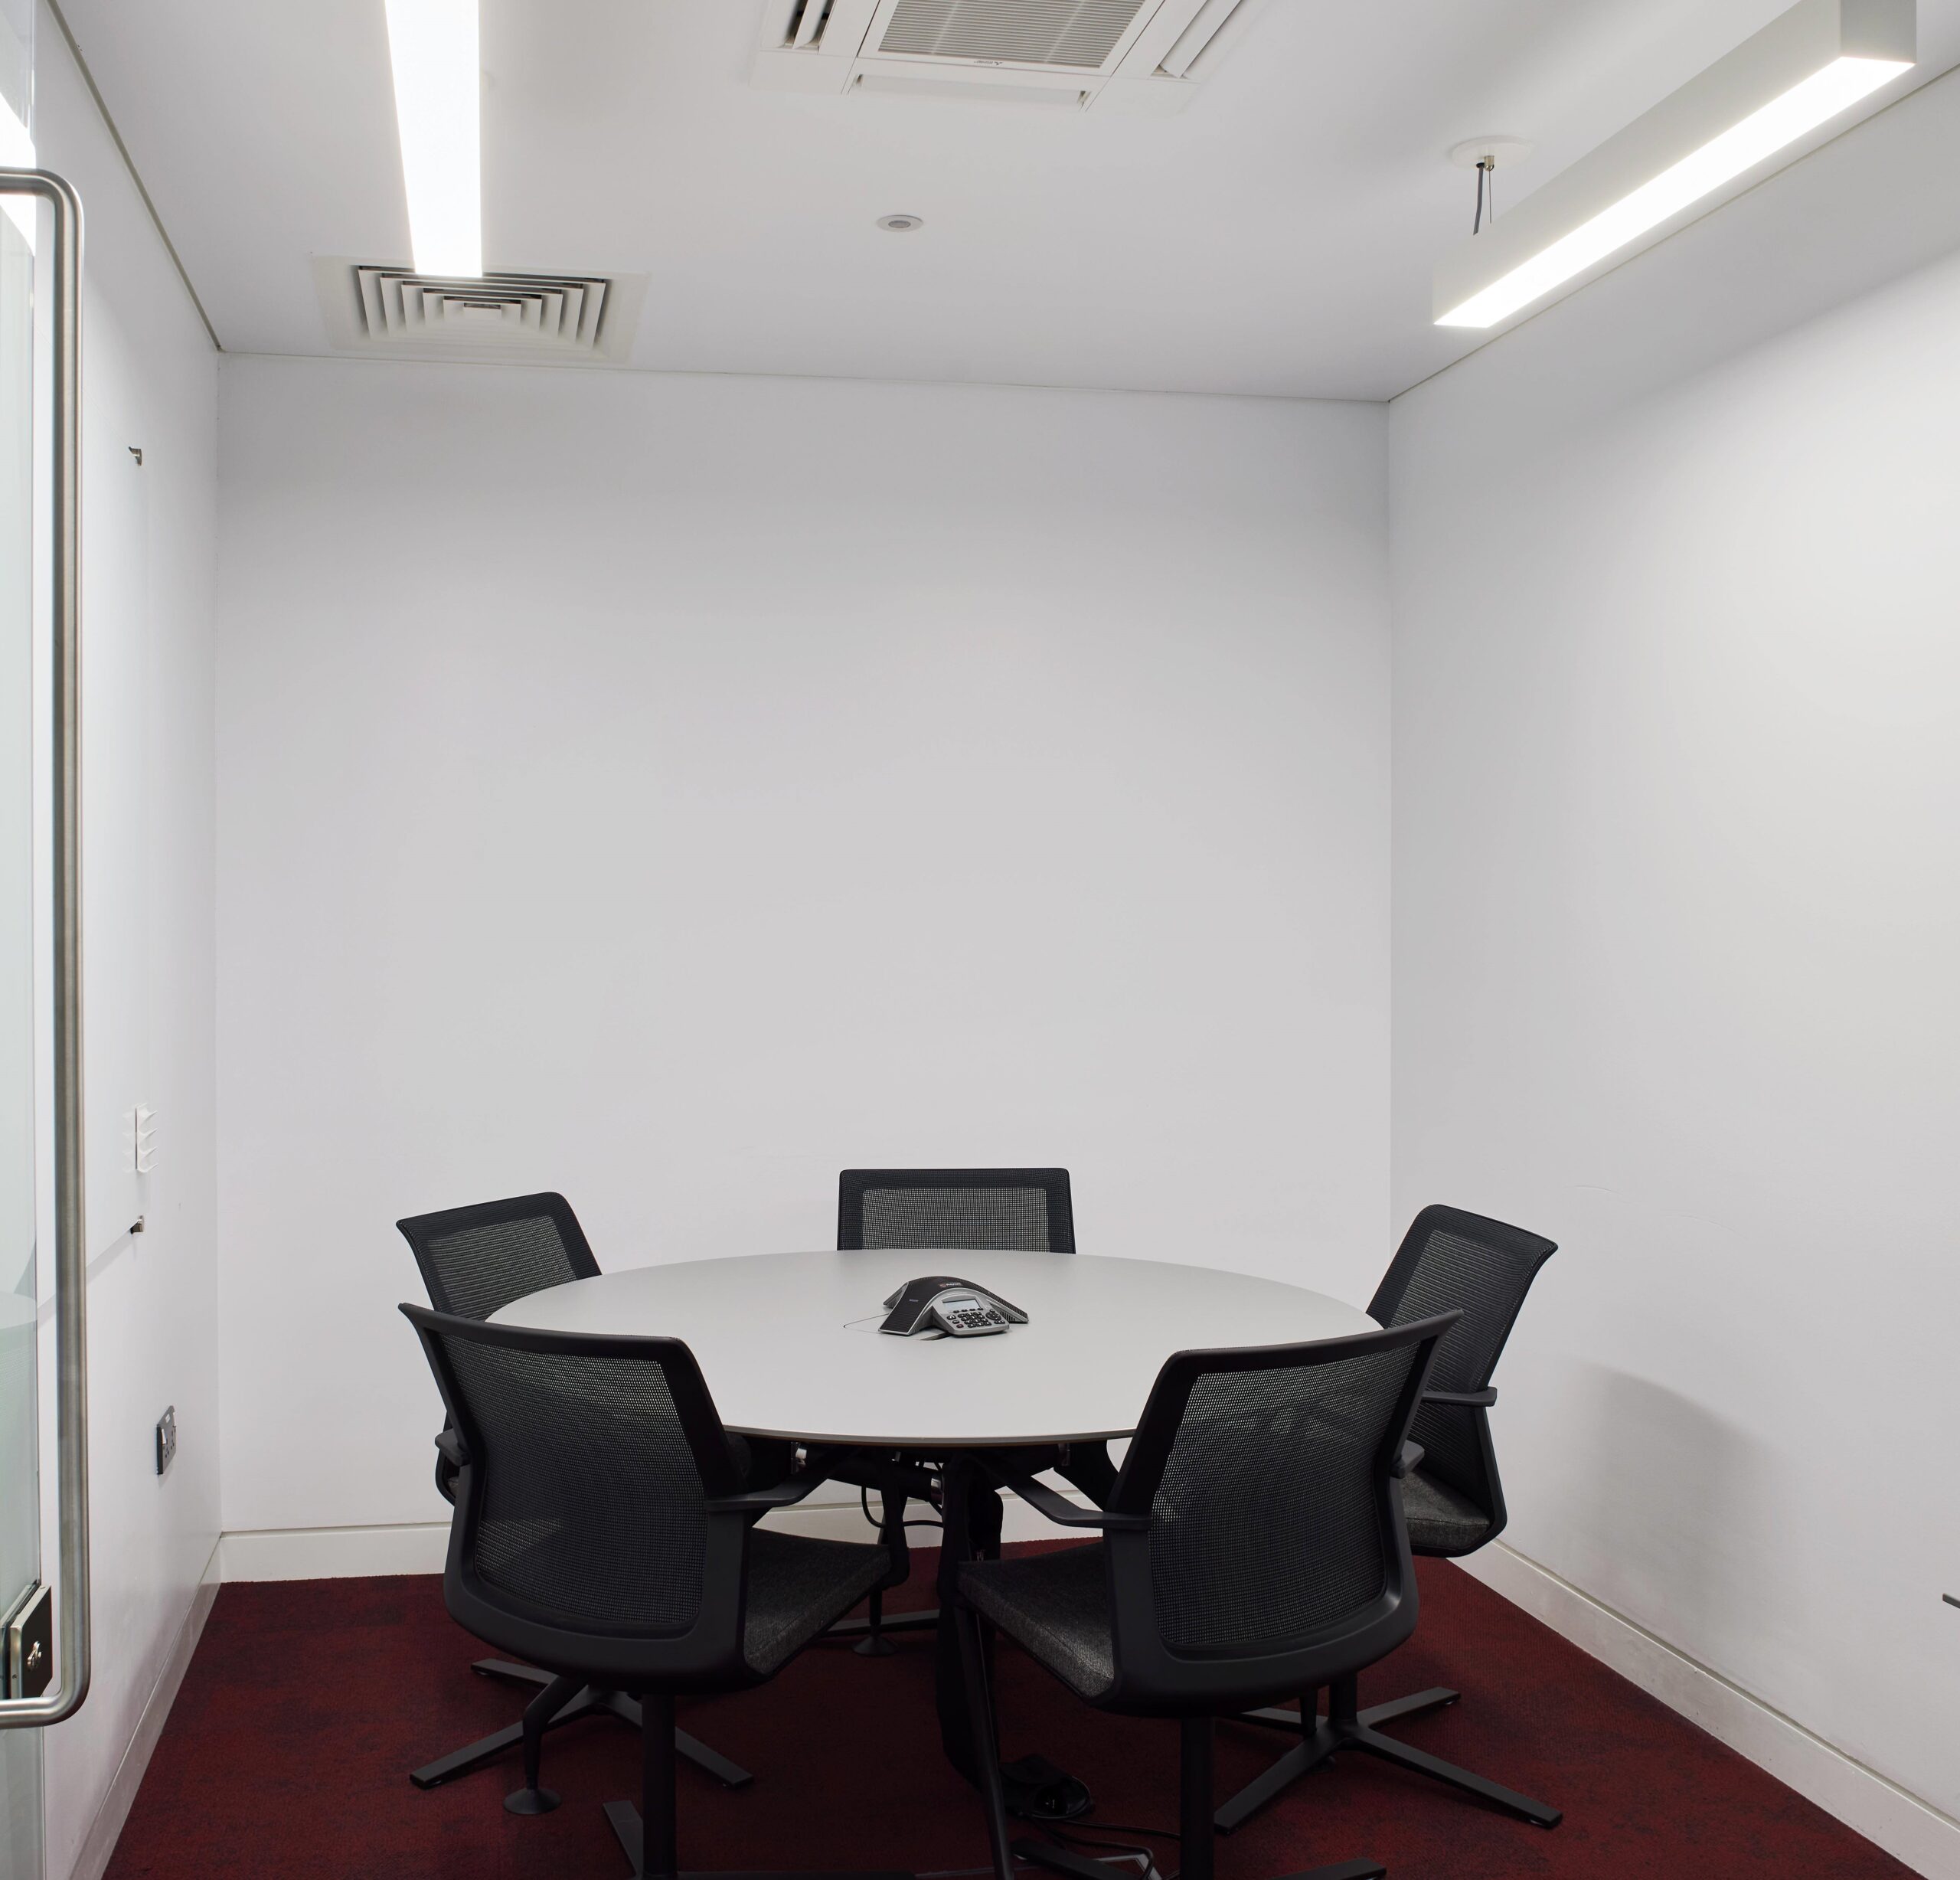 Nexus meeting room - small